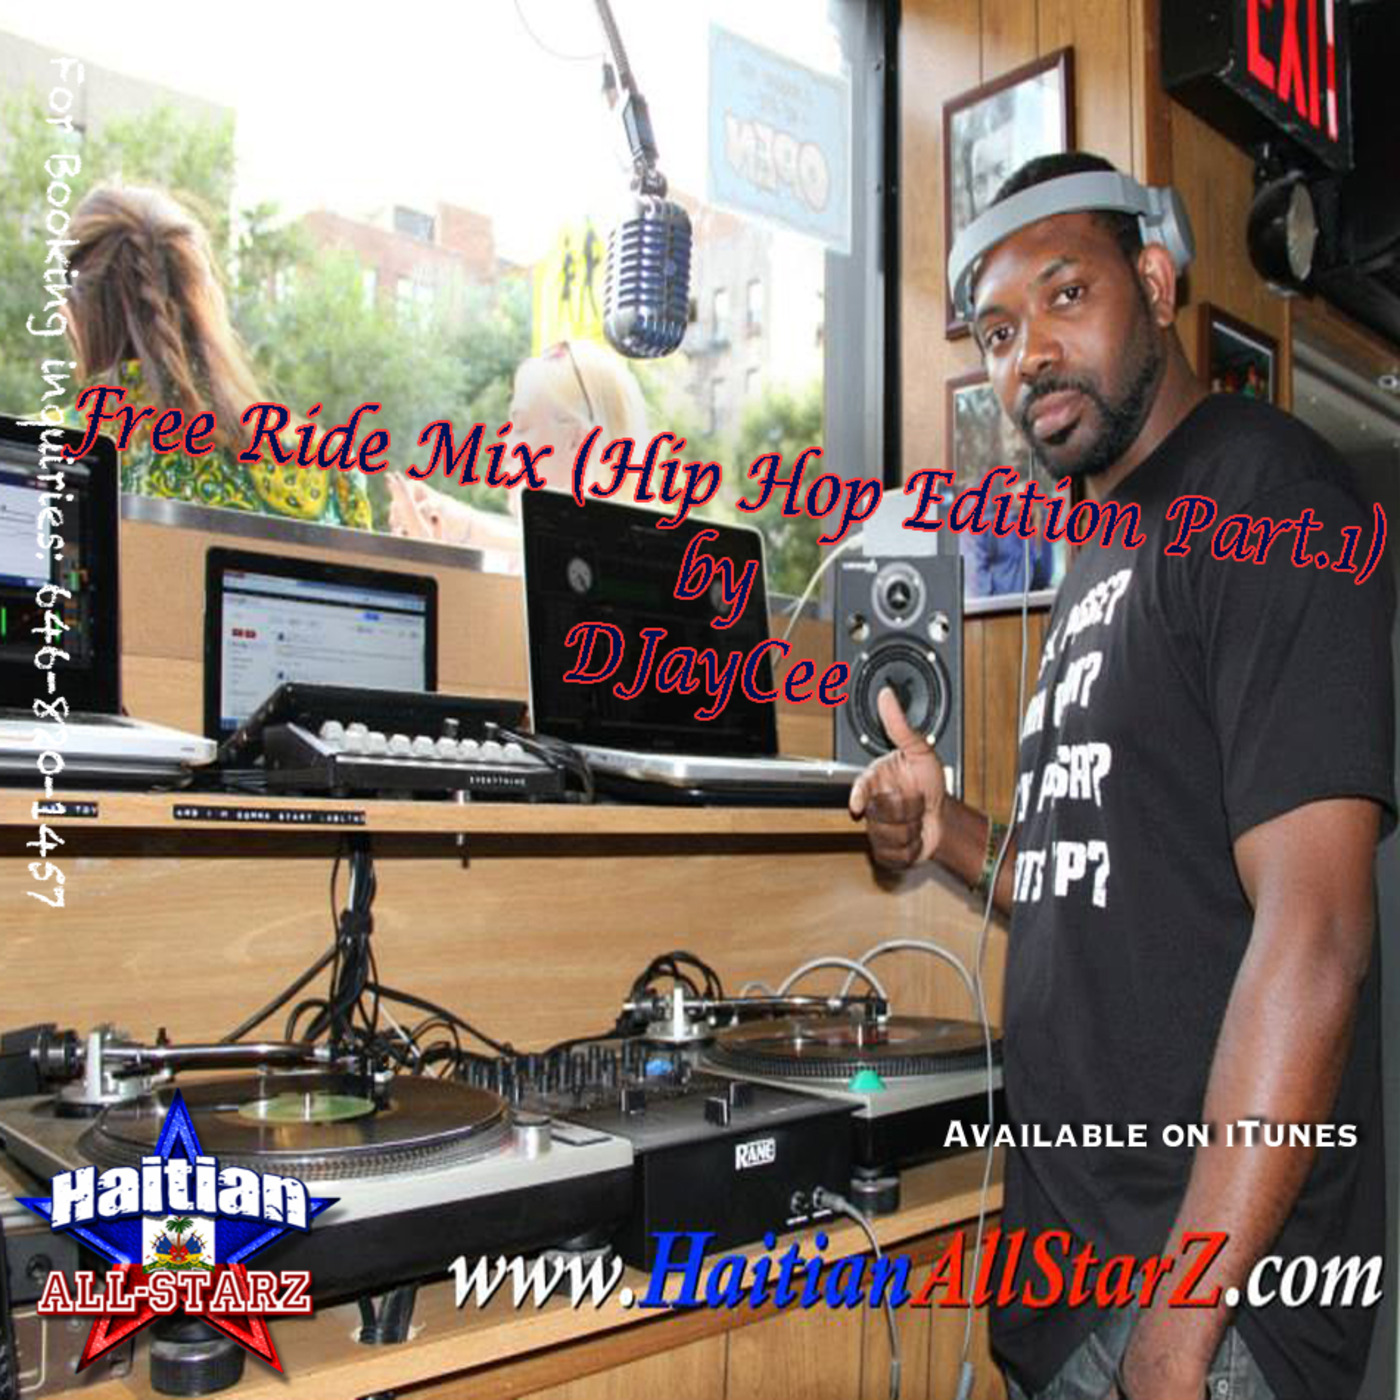 Free Ride Mix (Hip Hop Edition Part.1) - DJayCee {Haitian All-StarZ DJs}